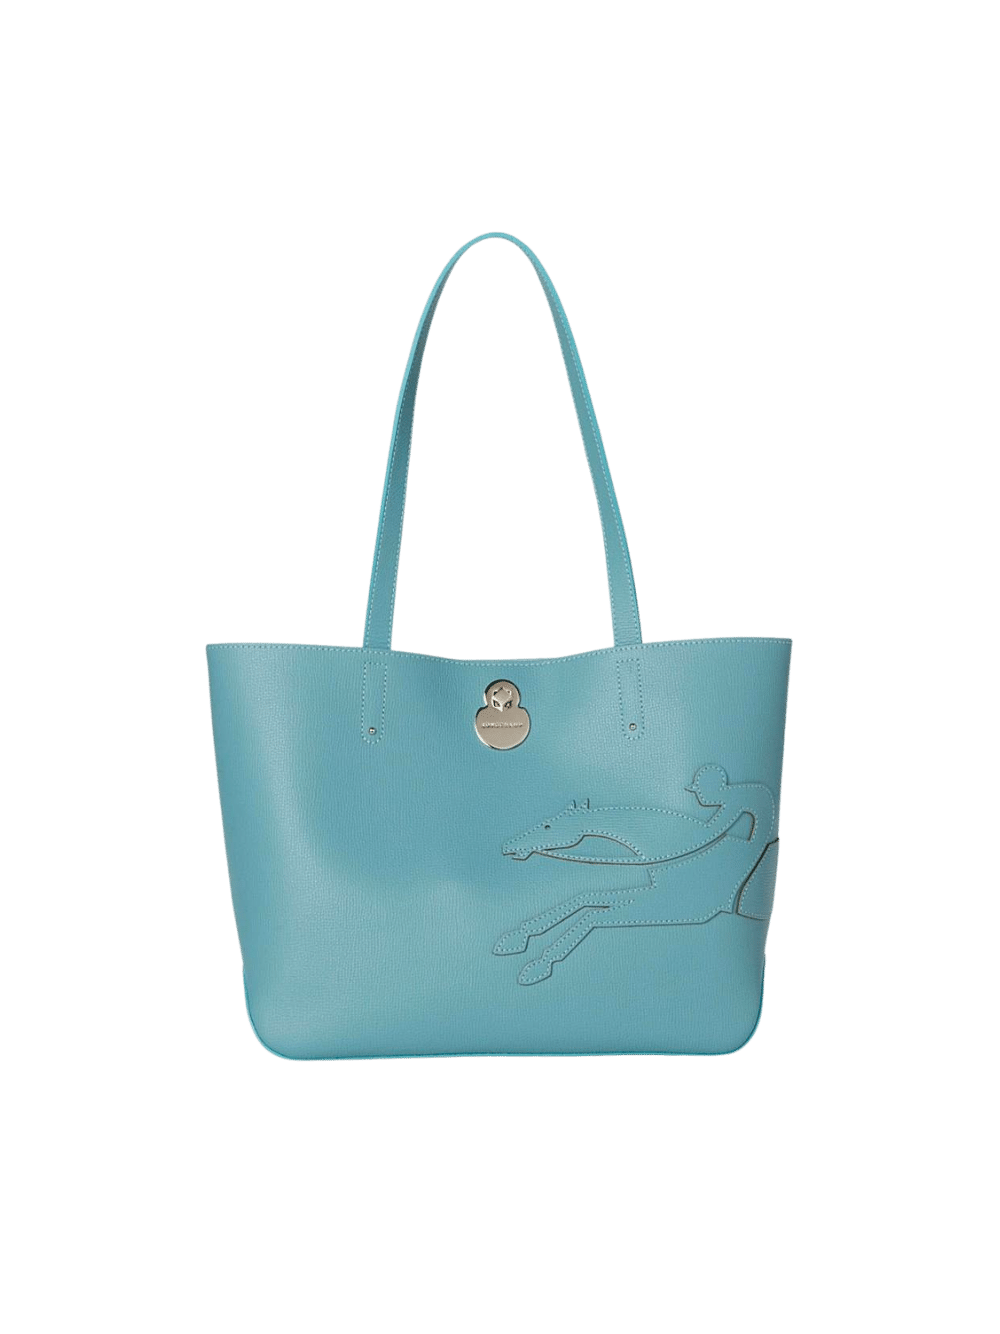 Shop-It Small Shoulder Bag in Jade